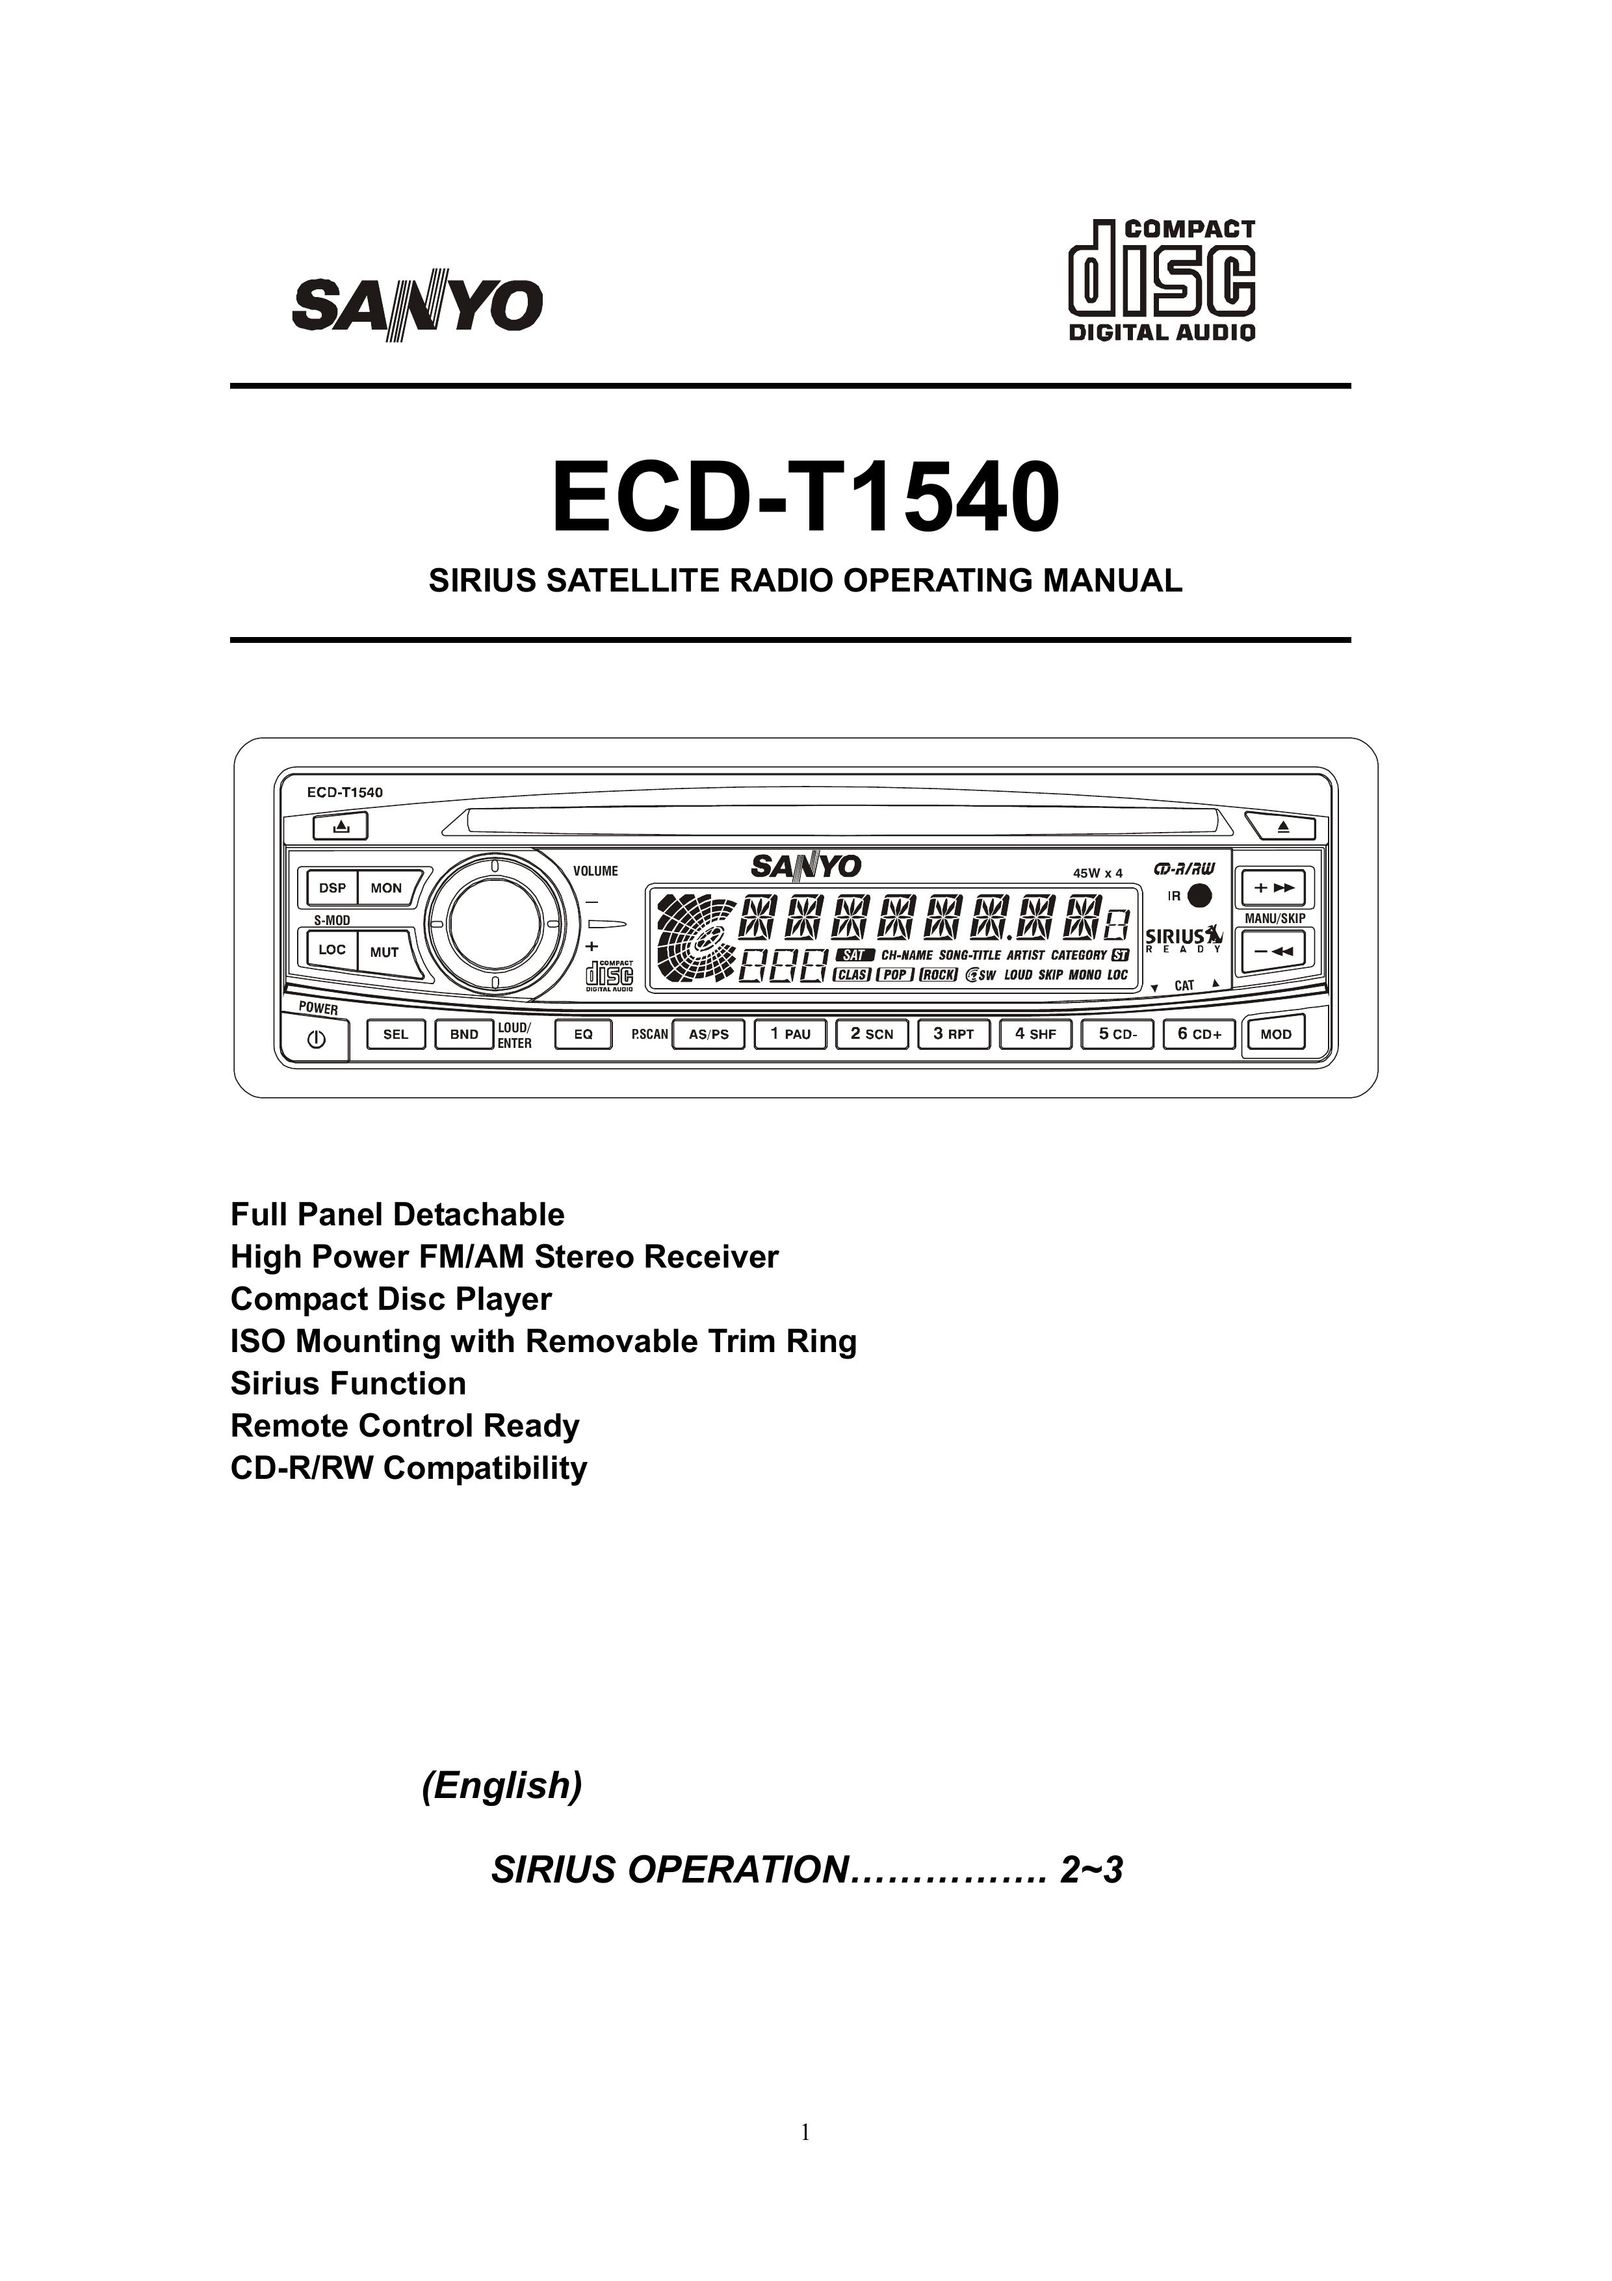 Sirius Satellite Radio ECD-T1540 Stereo Receiver User Manual